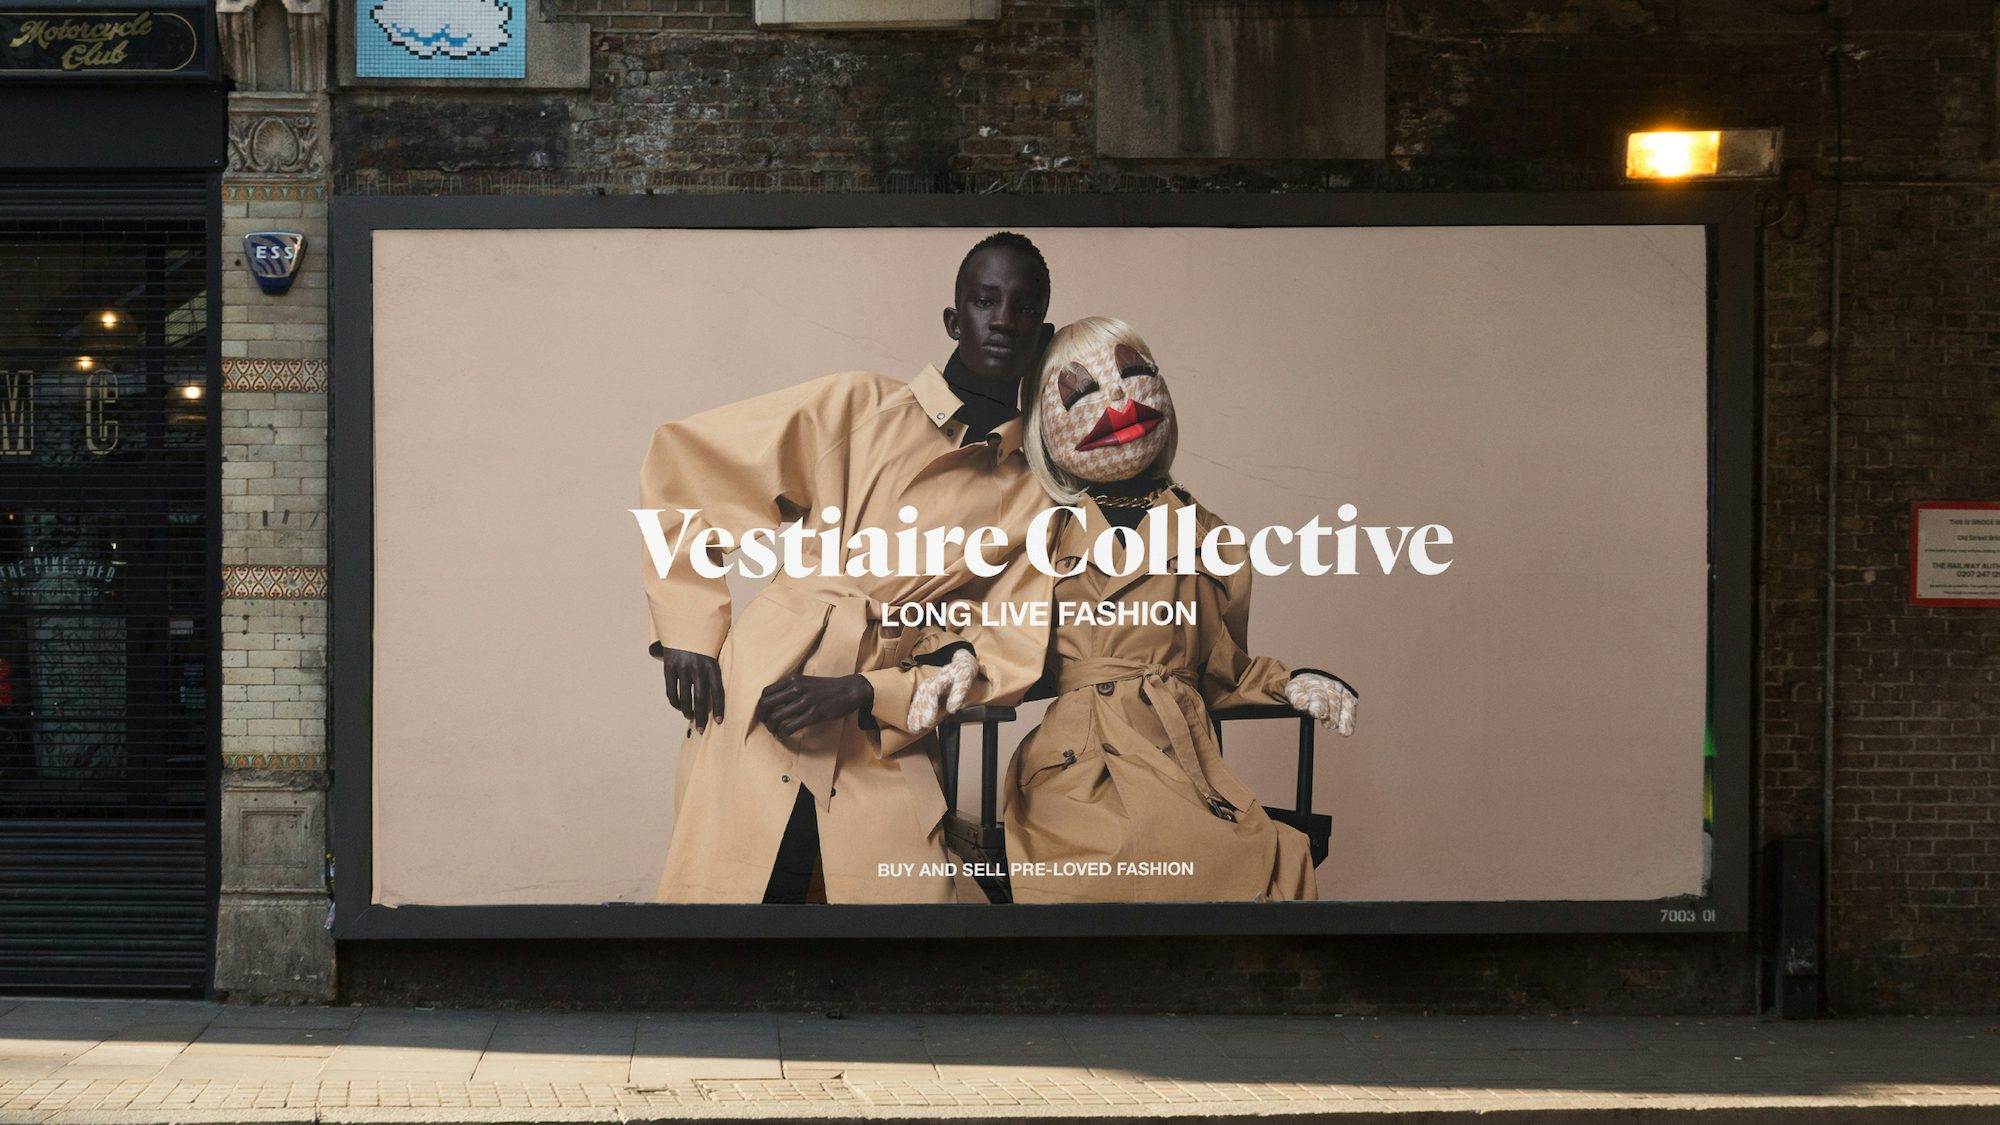 Long Live Fashion: Vestiaire Collective reinvents itself with Loïc